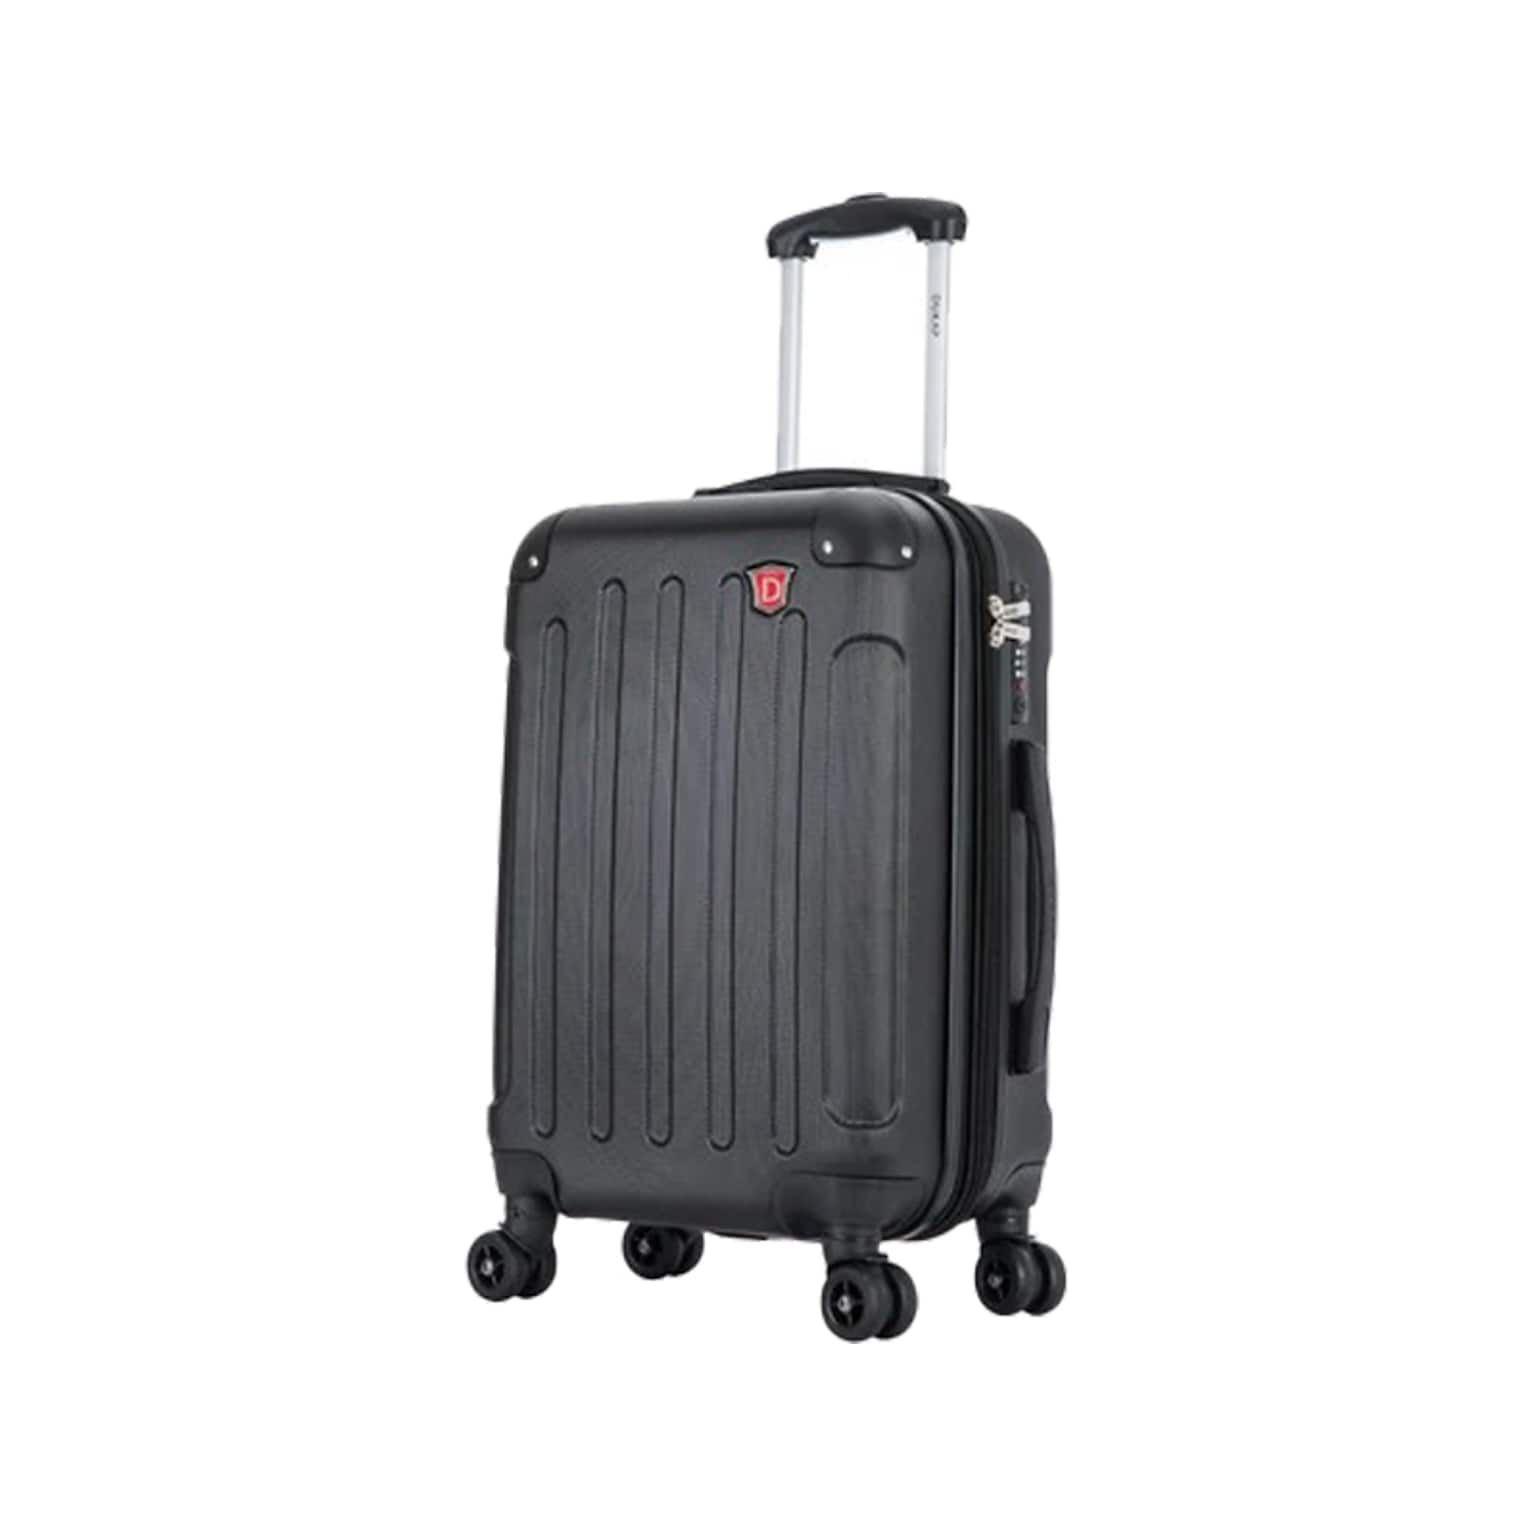 DUKAP Intely 19.5 Hardside Suitcase, 4-Wheeled Spinner, TSA Checkpoint Friendly, Black (DKINT00S-BLK)